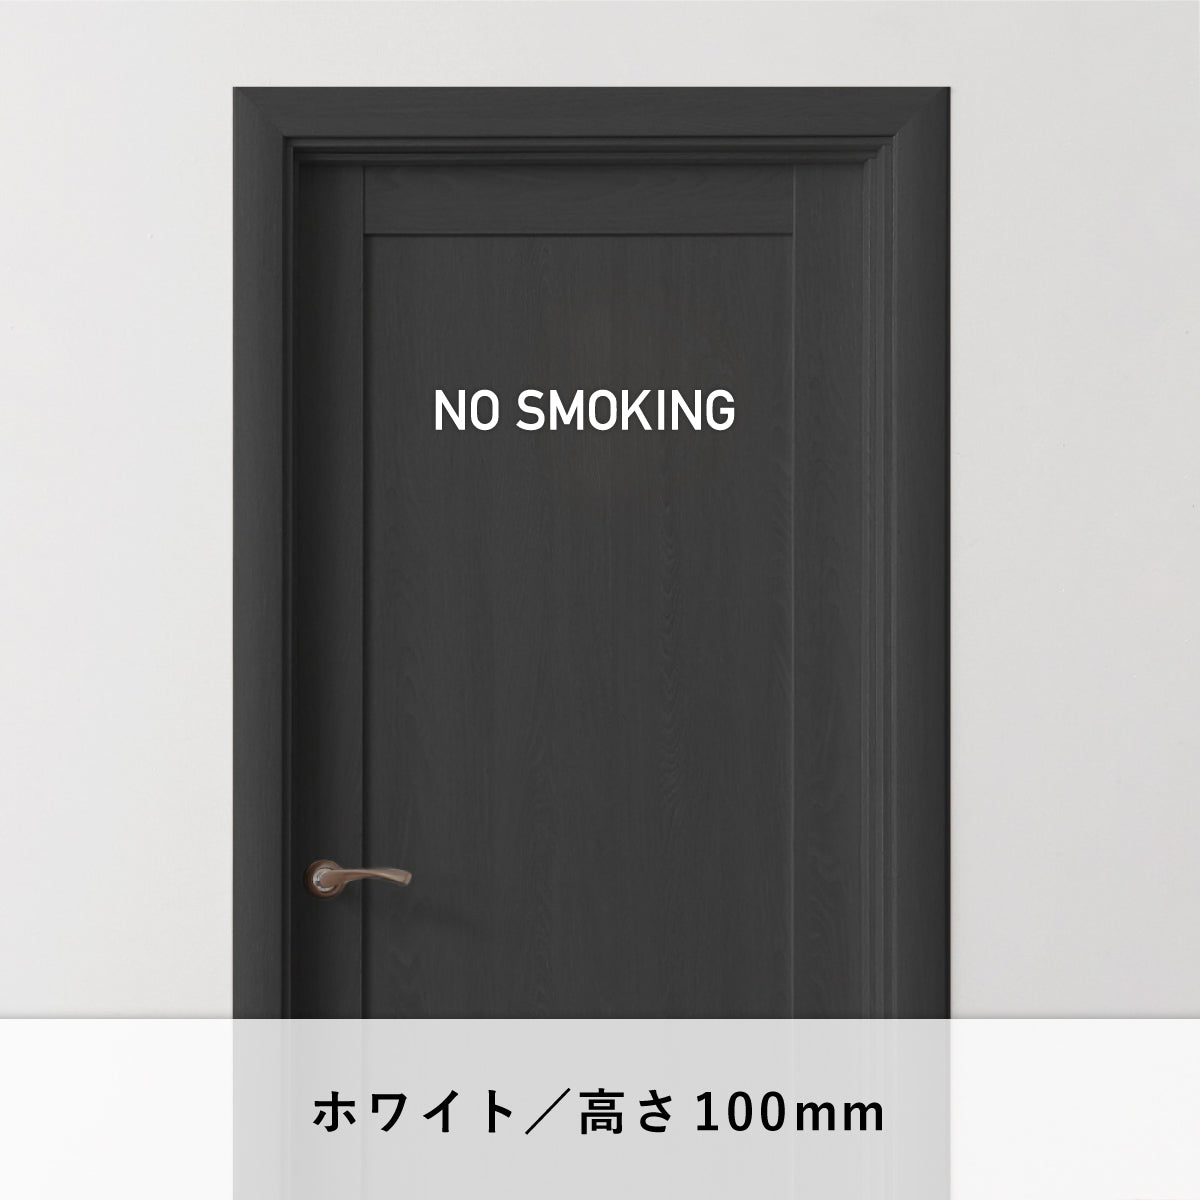 NO SMOKING（禁煙）文字切り抜きステッカー